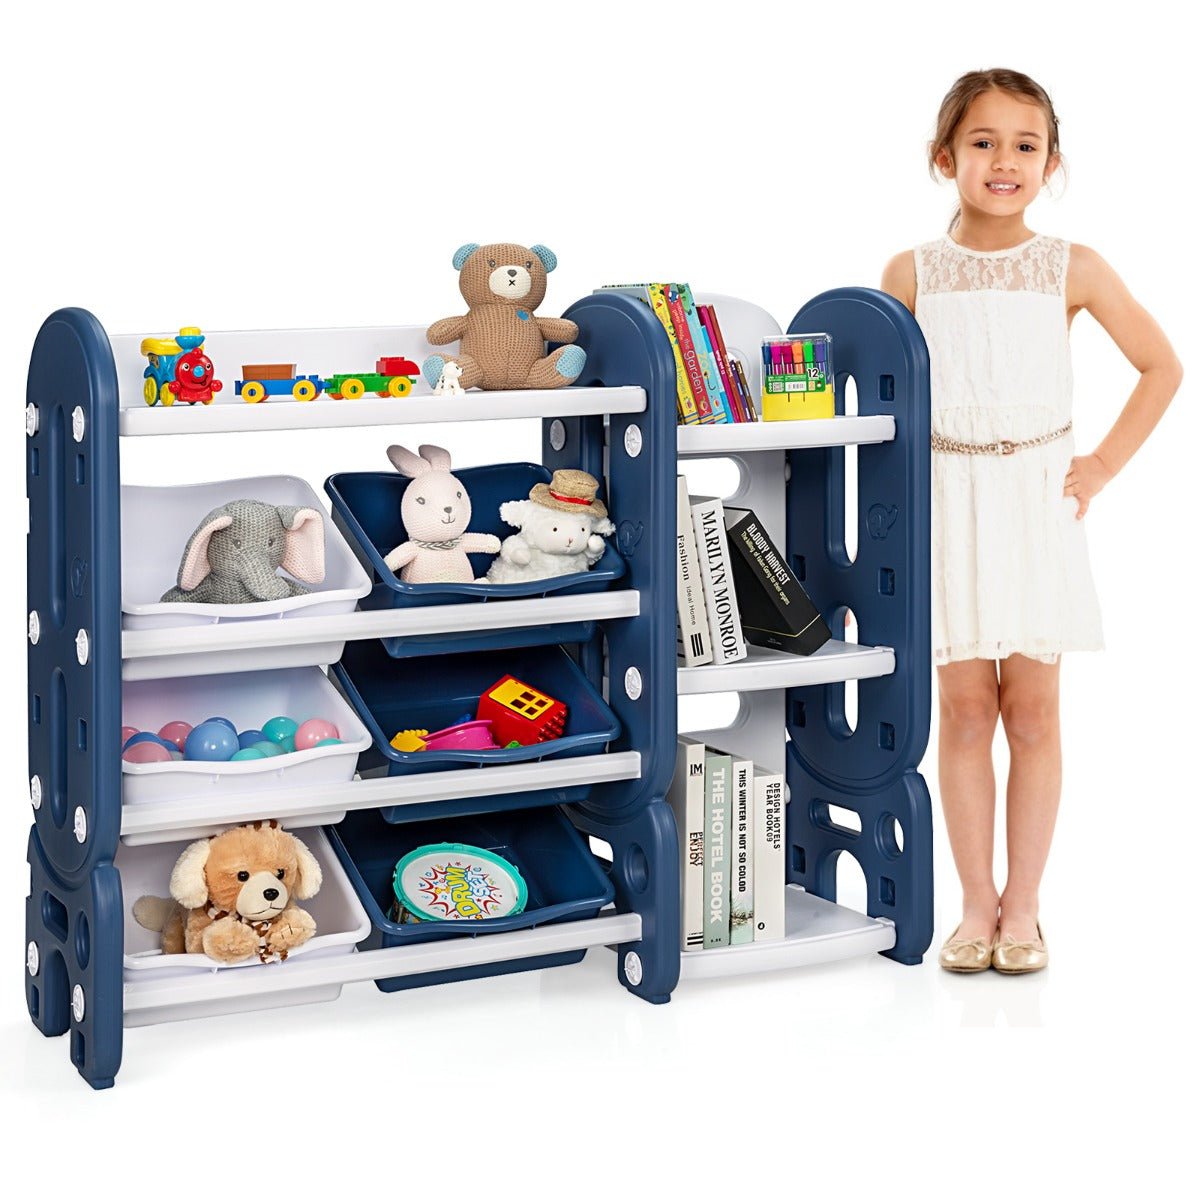 Keep Toys Organized in Style - Blue Toy Storage with Bookshelf